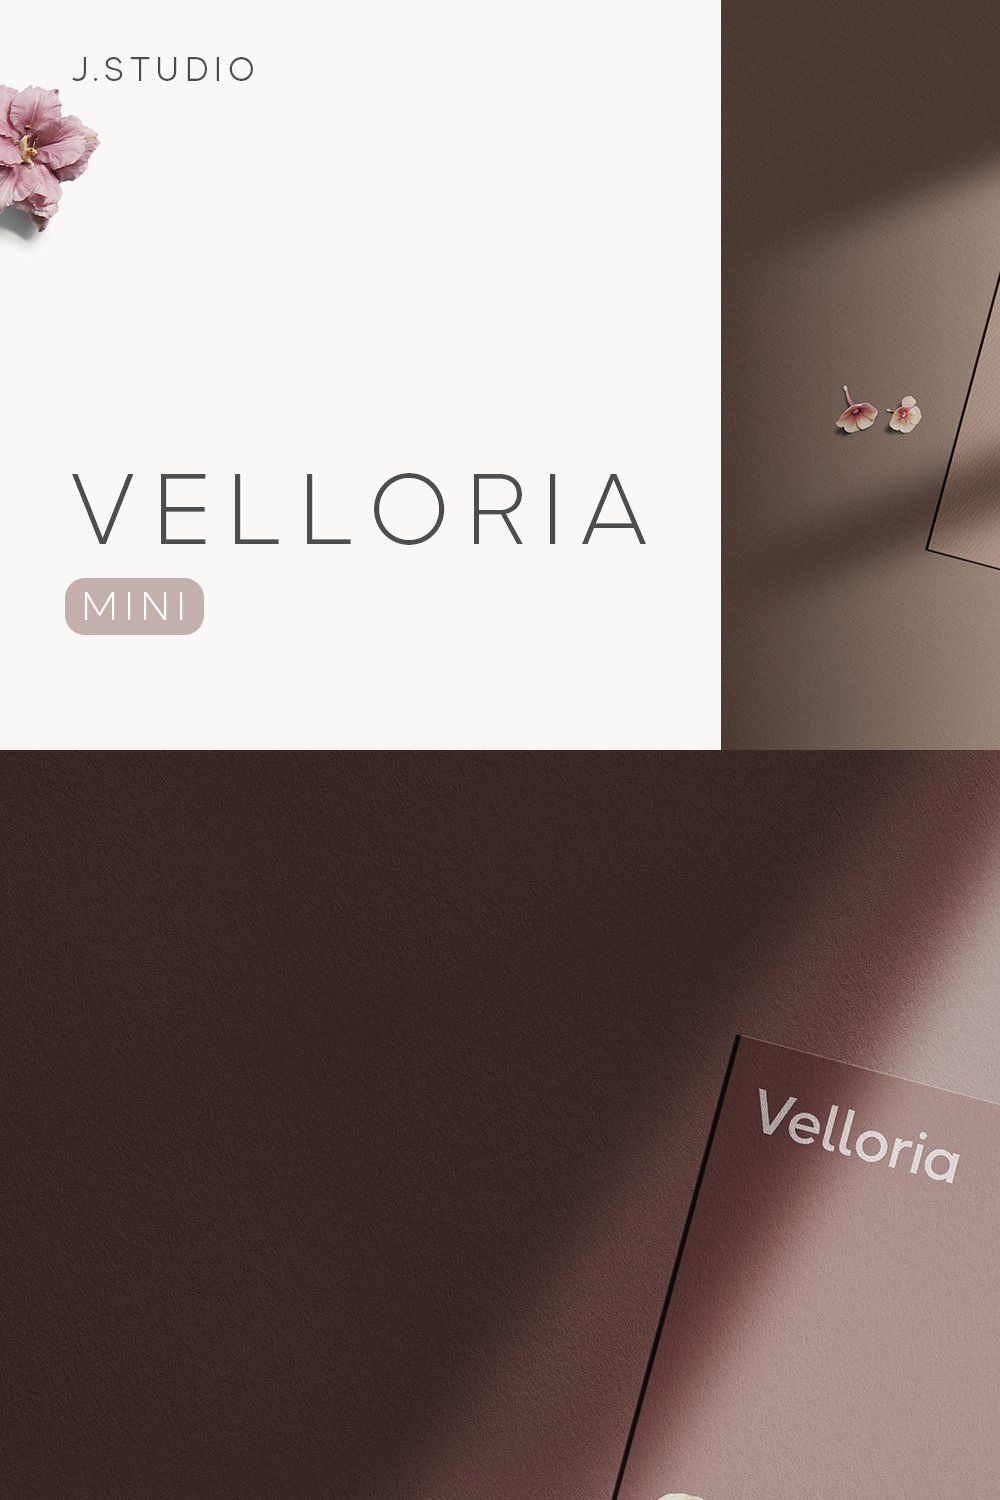 Velloria Mini — Stationery Mockup pinterest preview image.